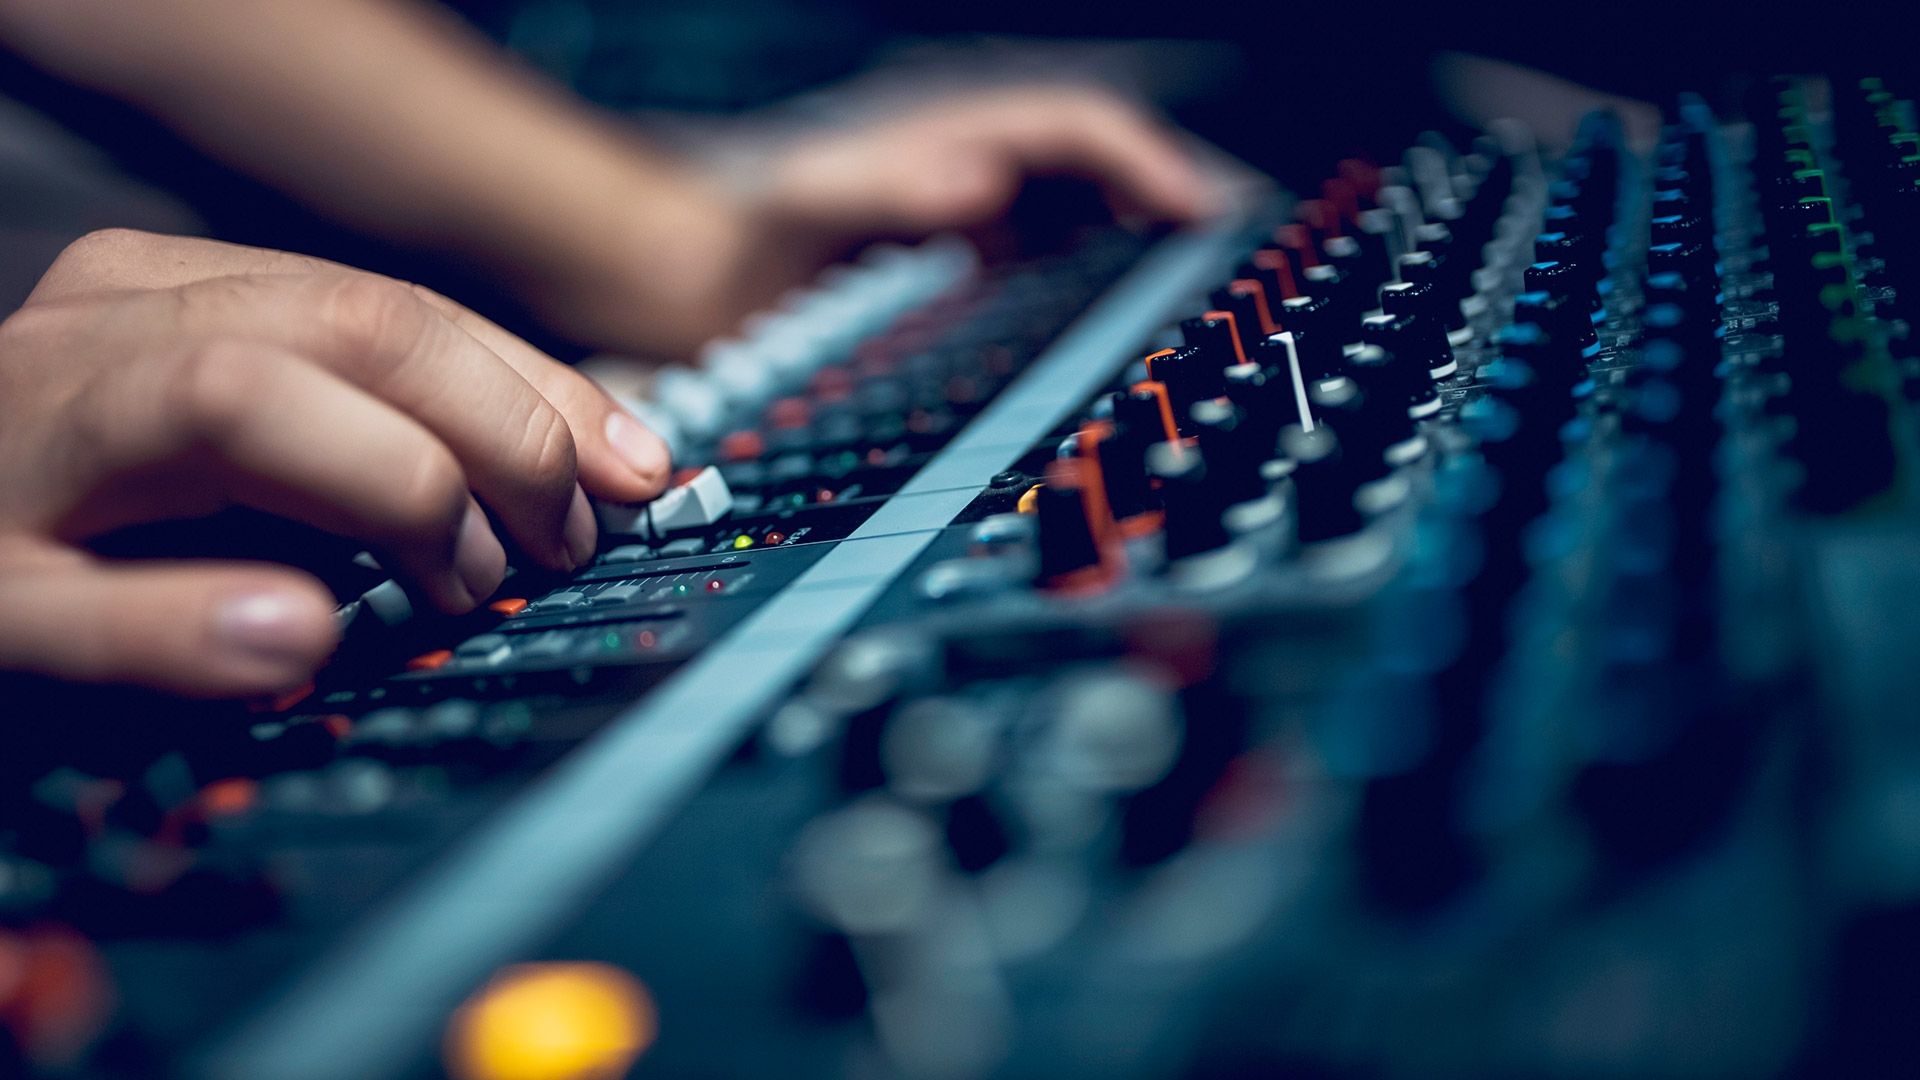 Source Hand with sound recording studio mixer